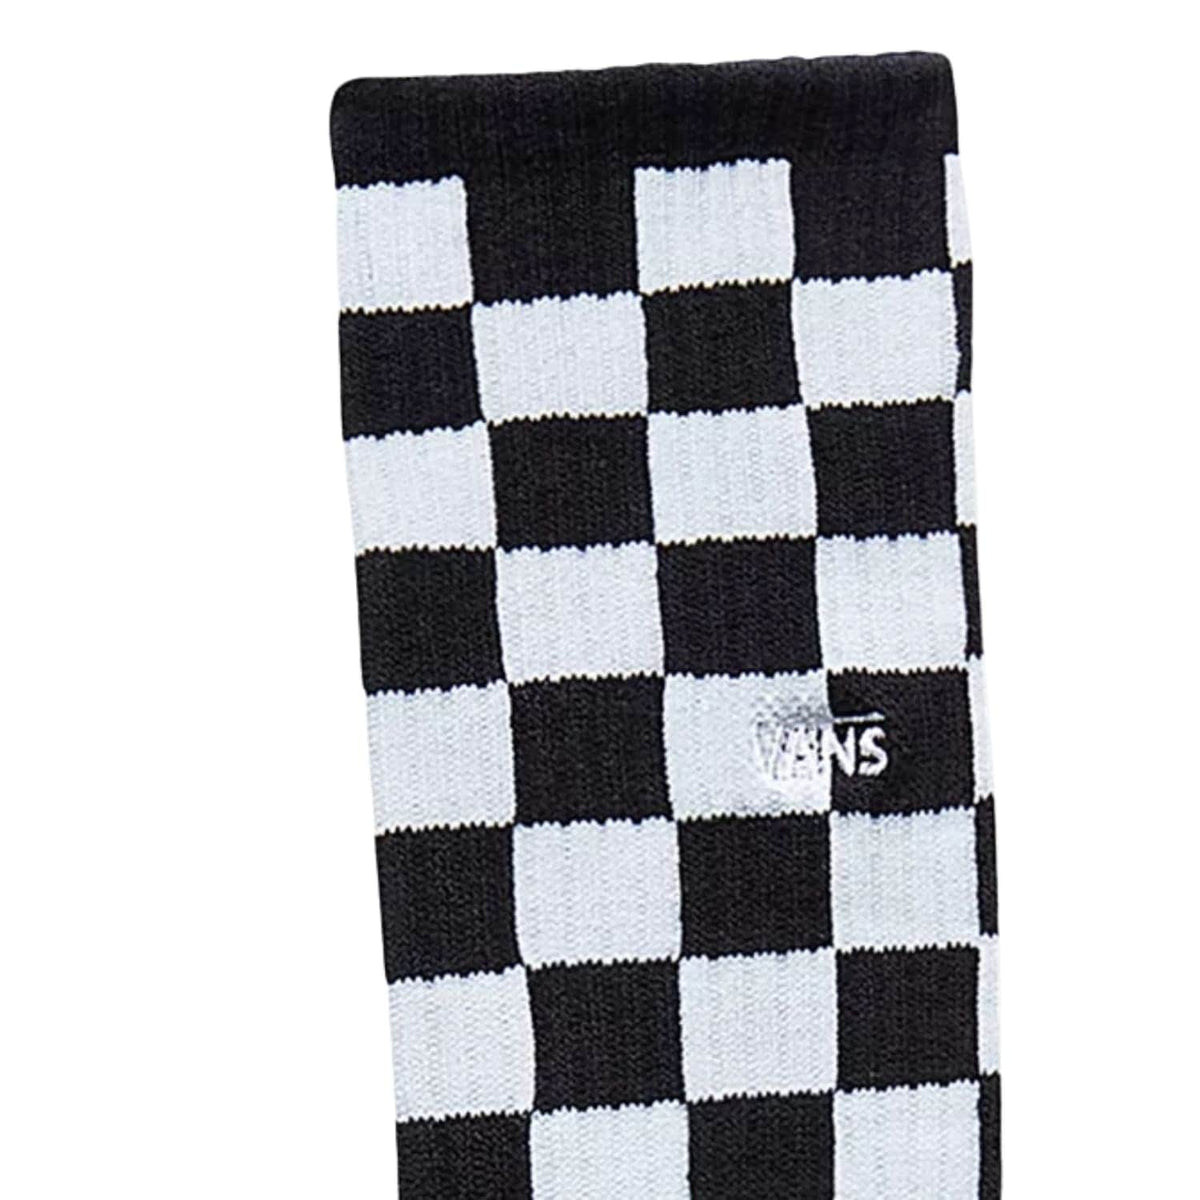 Vans Checkerboard Crew Socks Black White - Mens Crew Length Socks by Vans 8.5-12 UK